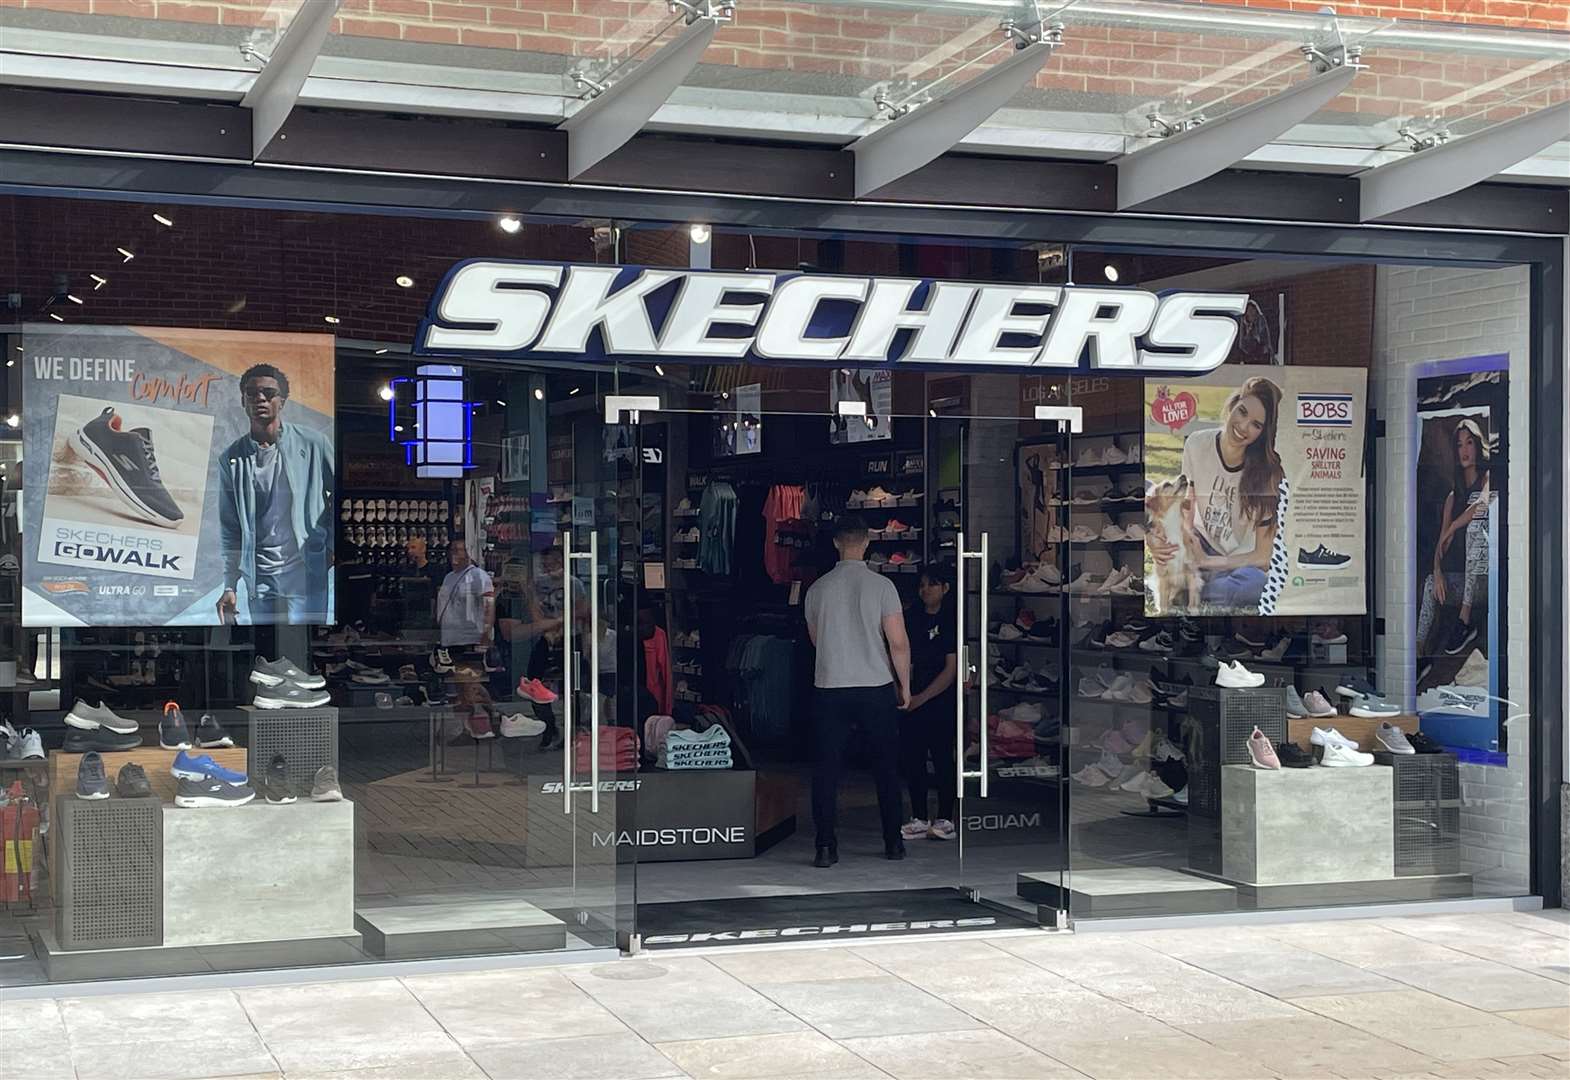 Skechers store opens in Walk, Maidstone alongside Ashford Designer and Canterbury